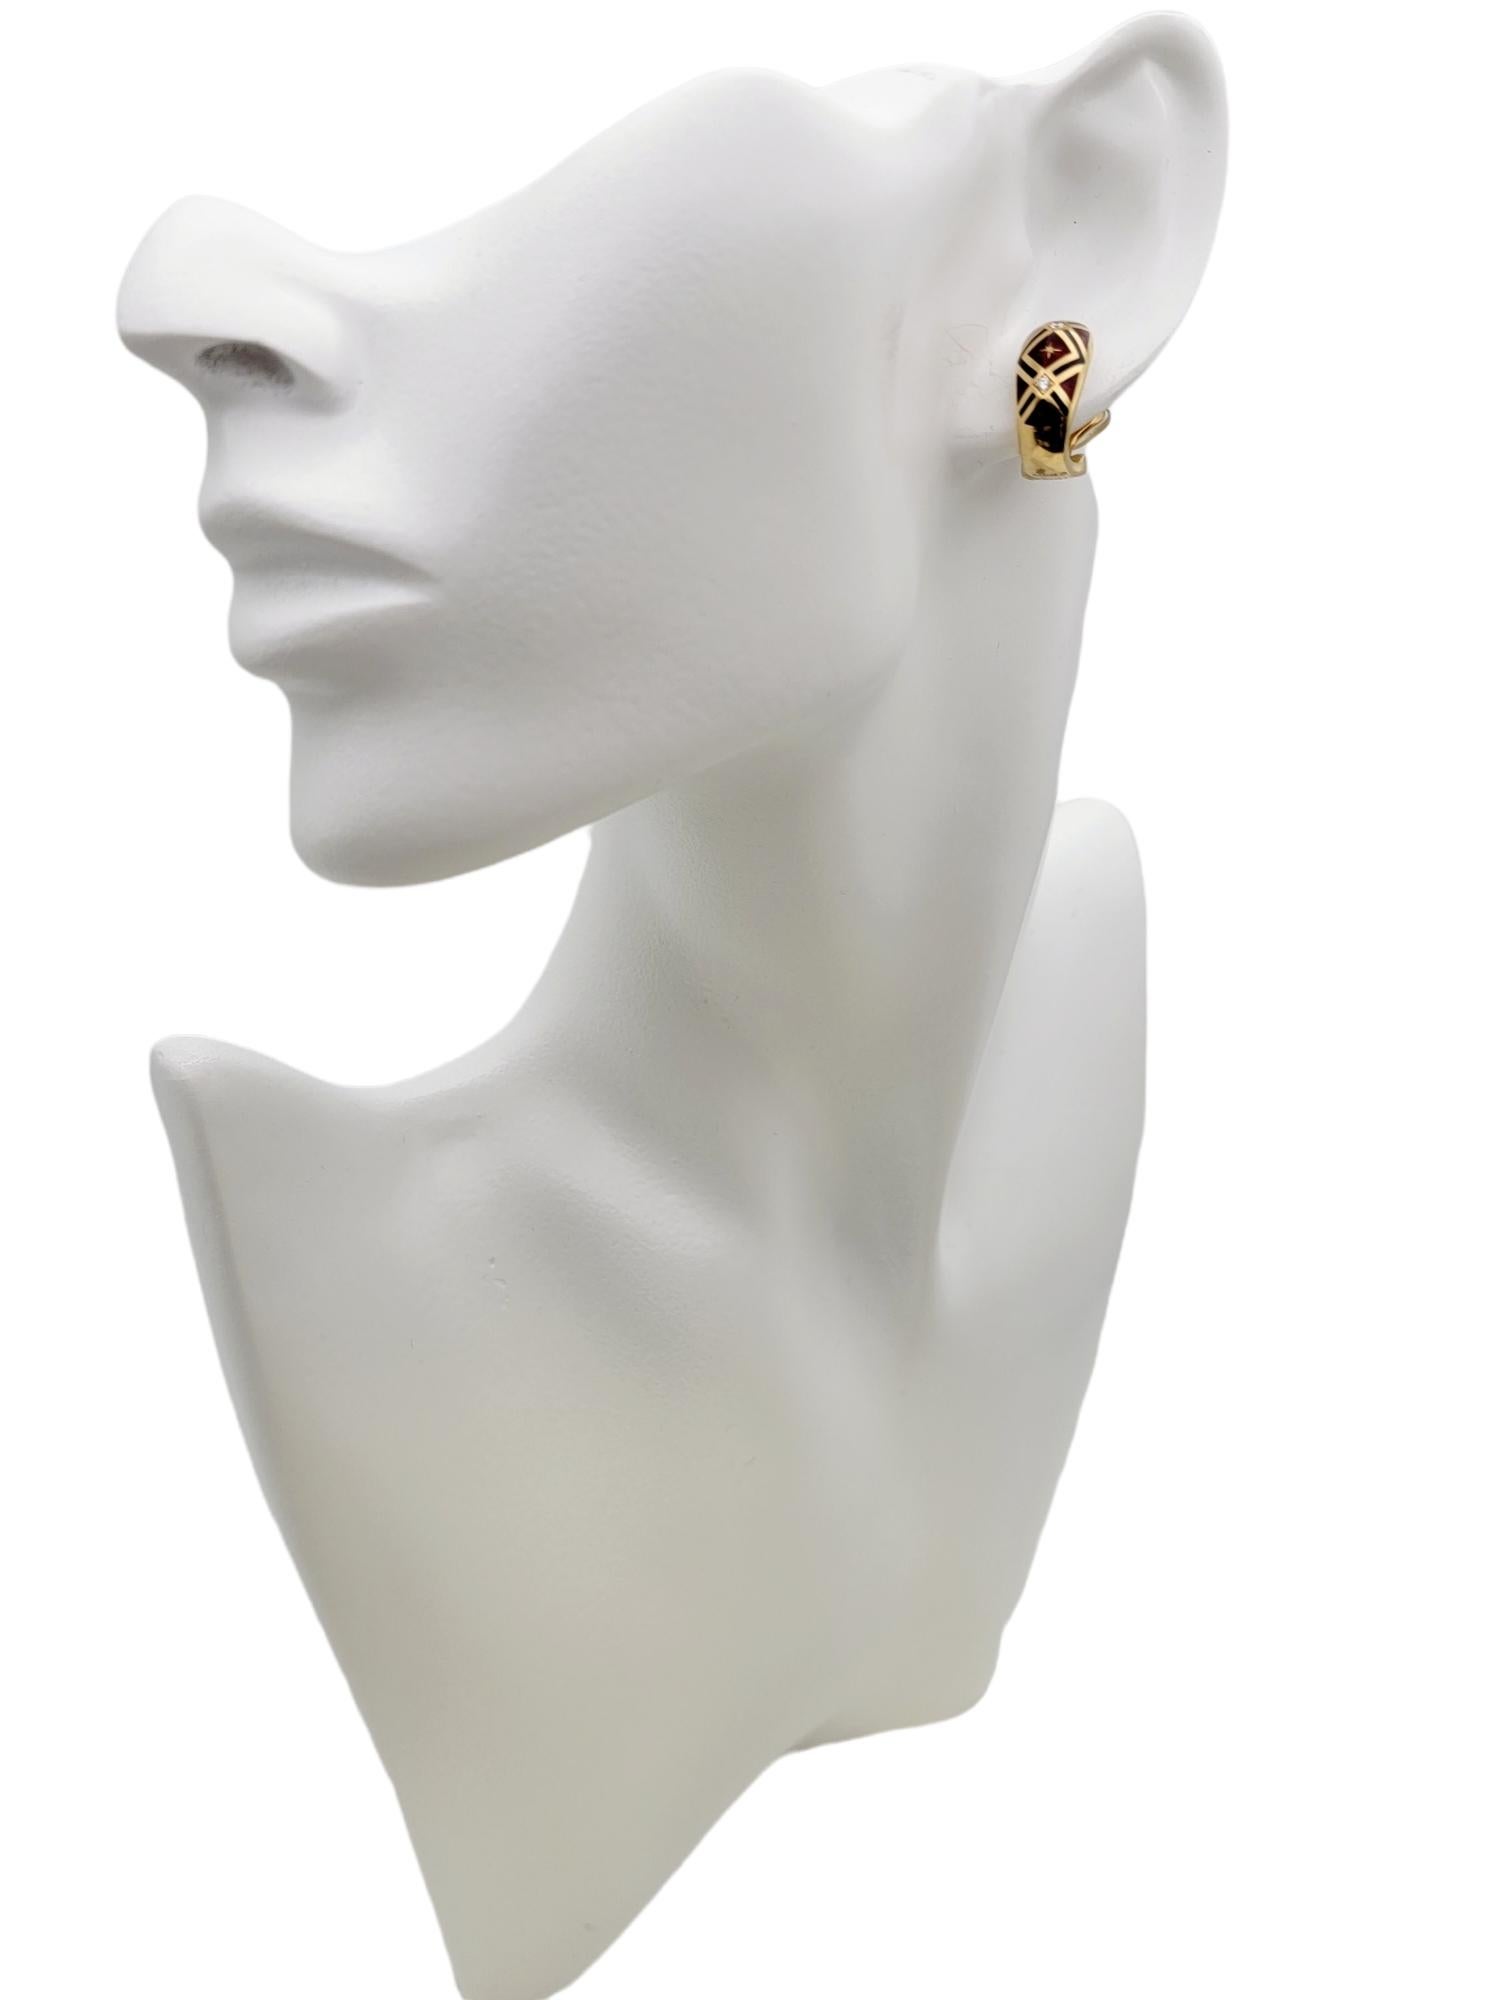 Faberge Guilloche Enamel and Diamond Half Hoop Earrings in 18 Karat Yellow Gold For Sale 3